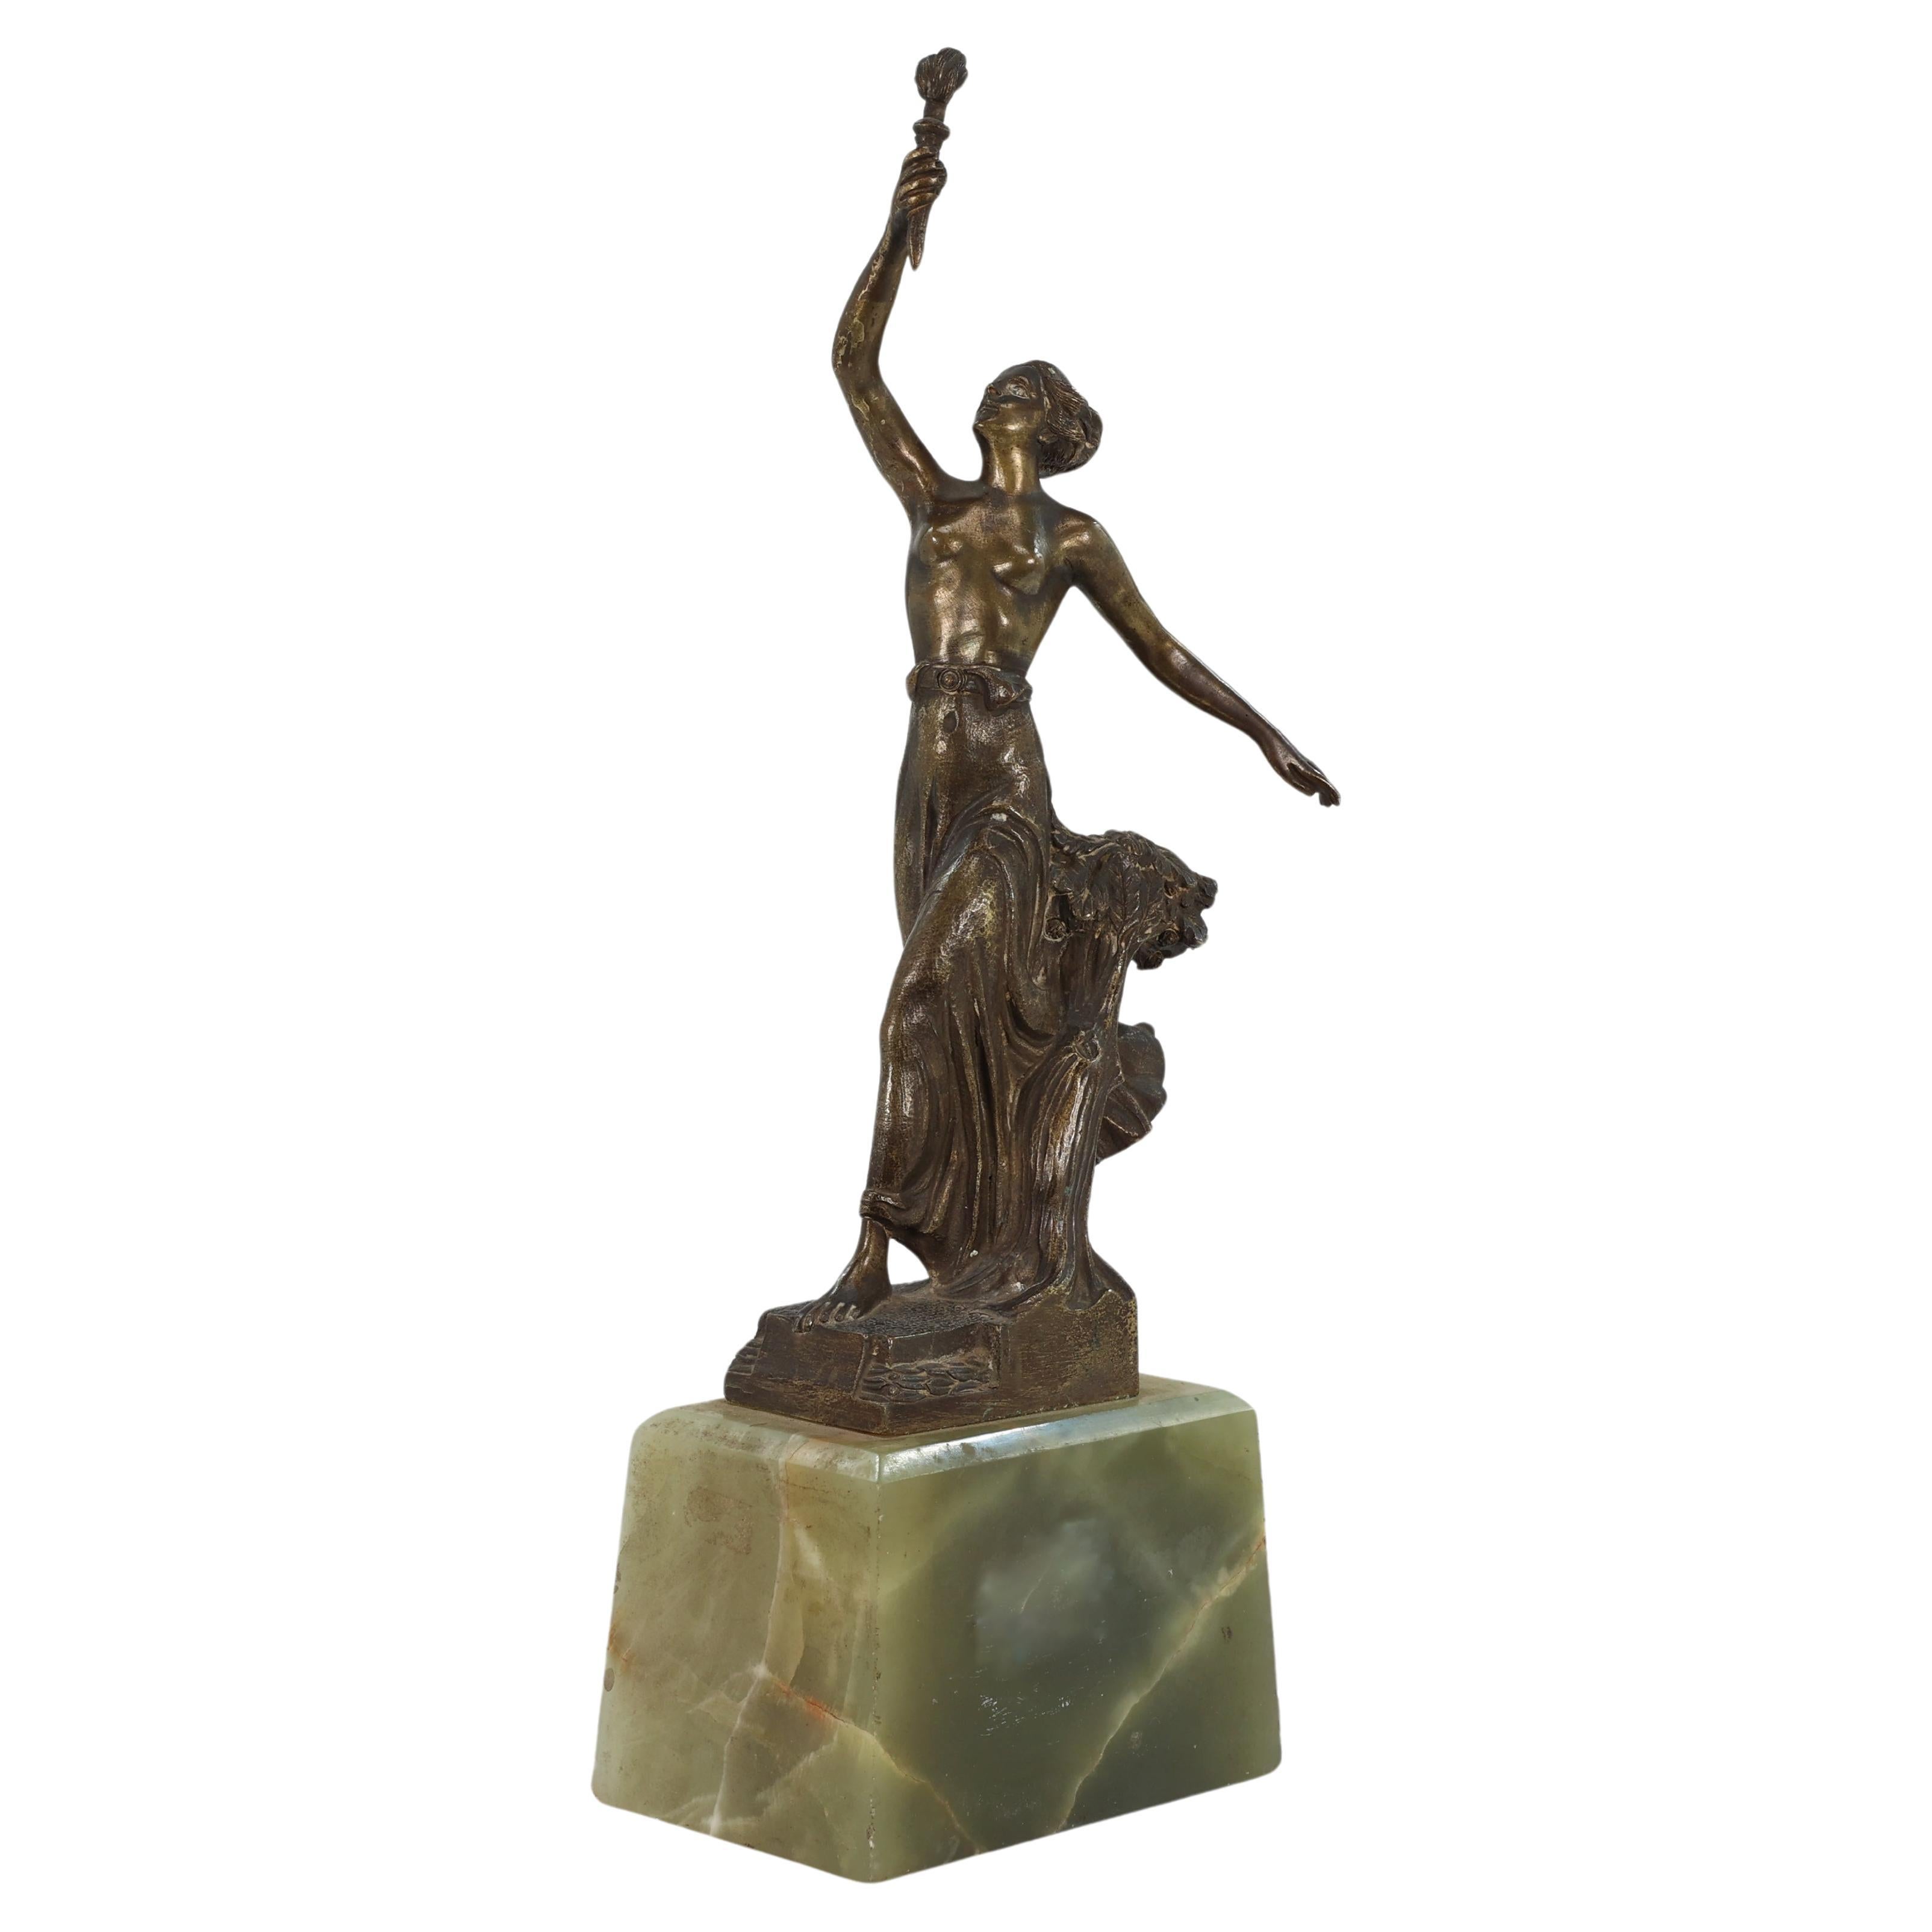 B V Fernandez. An Art Deco bronze figure on an onyx base